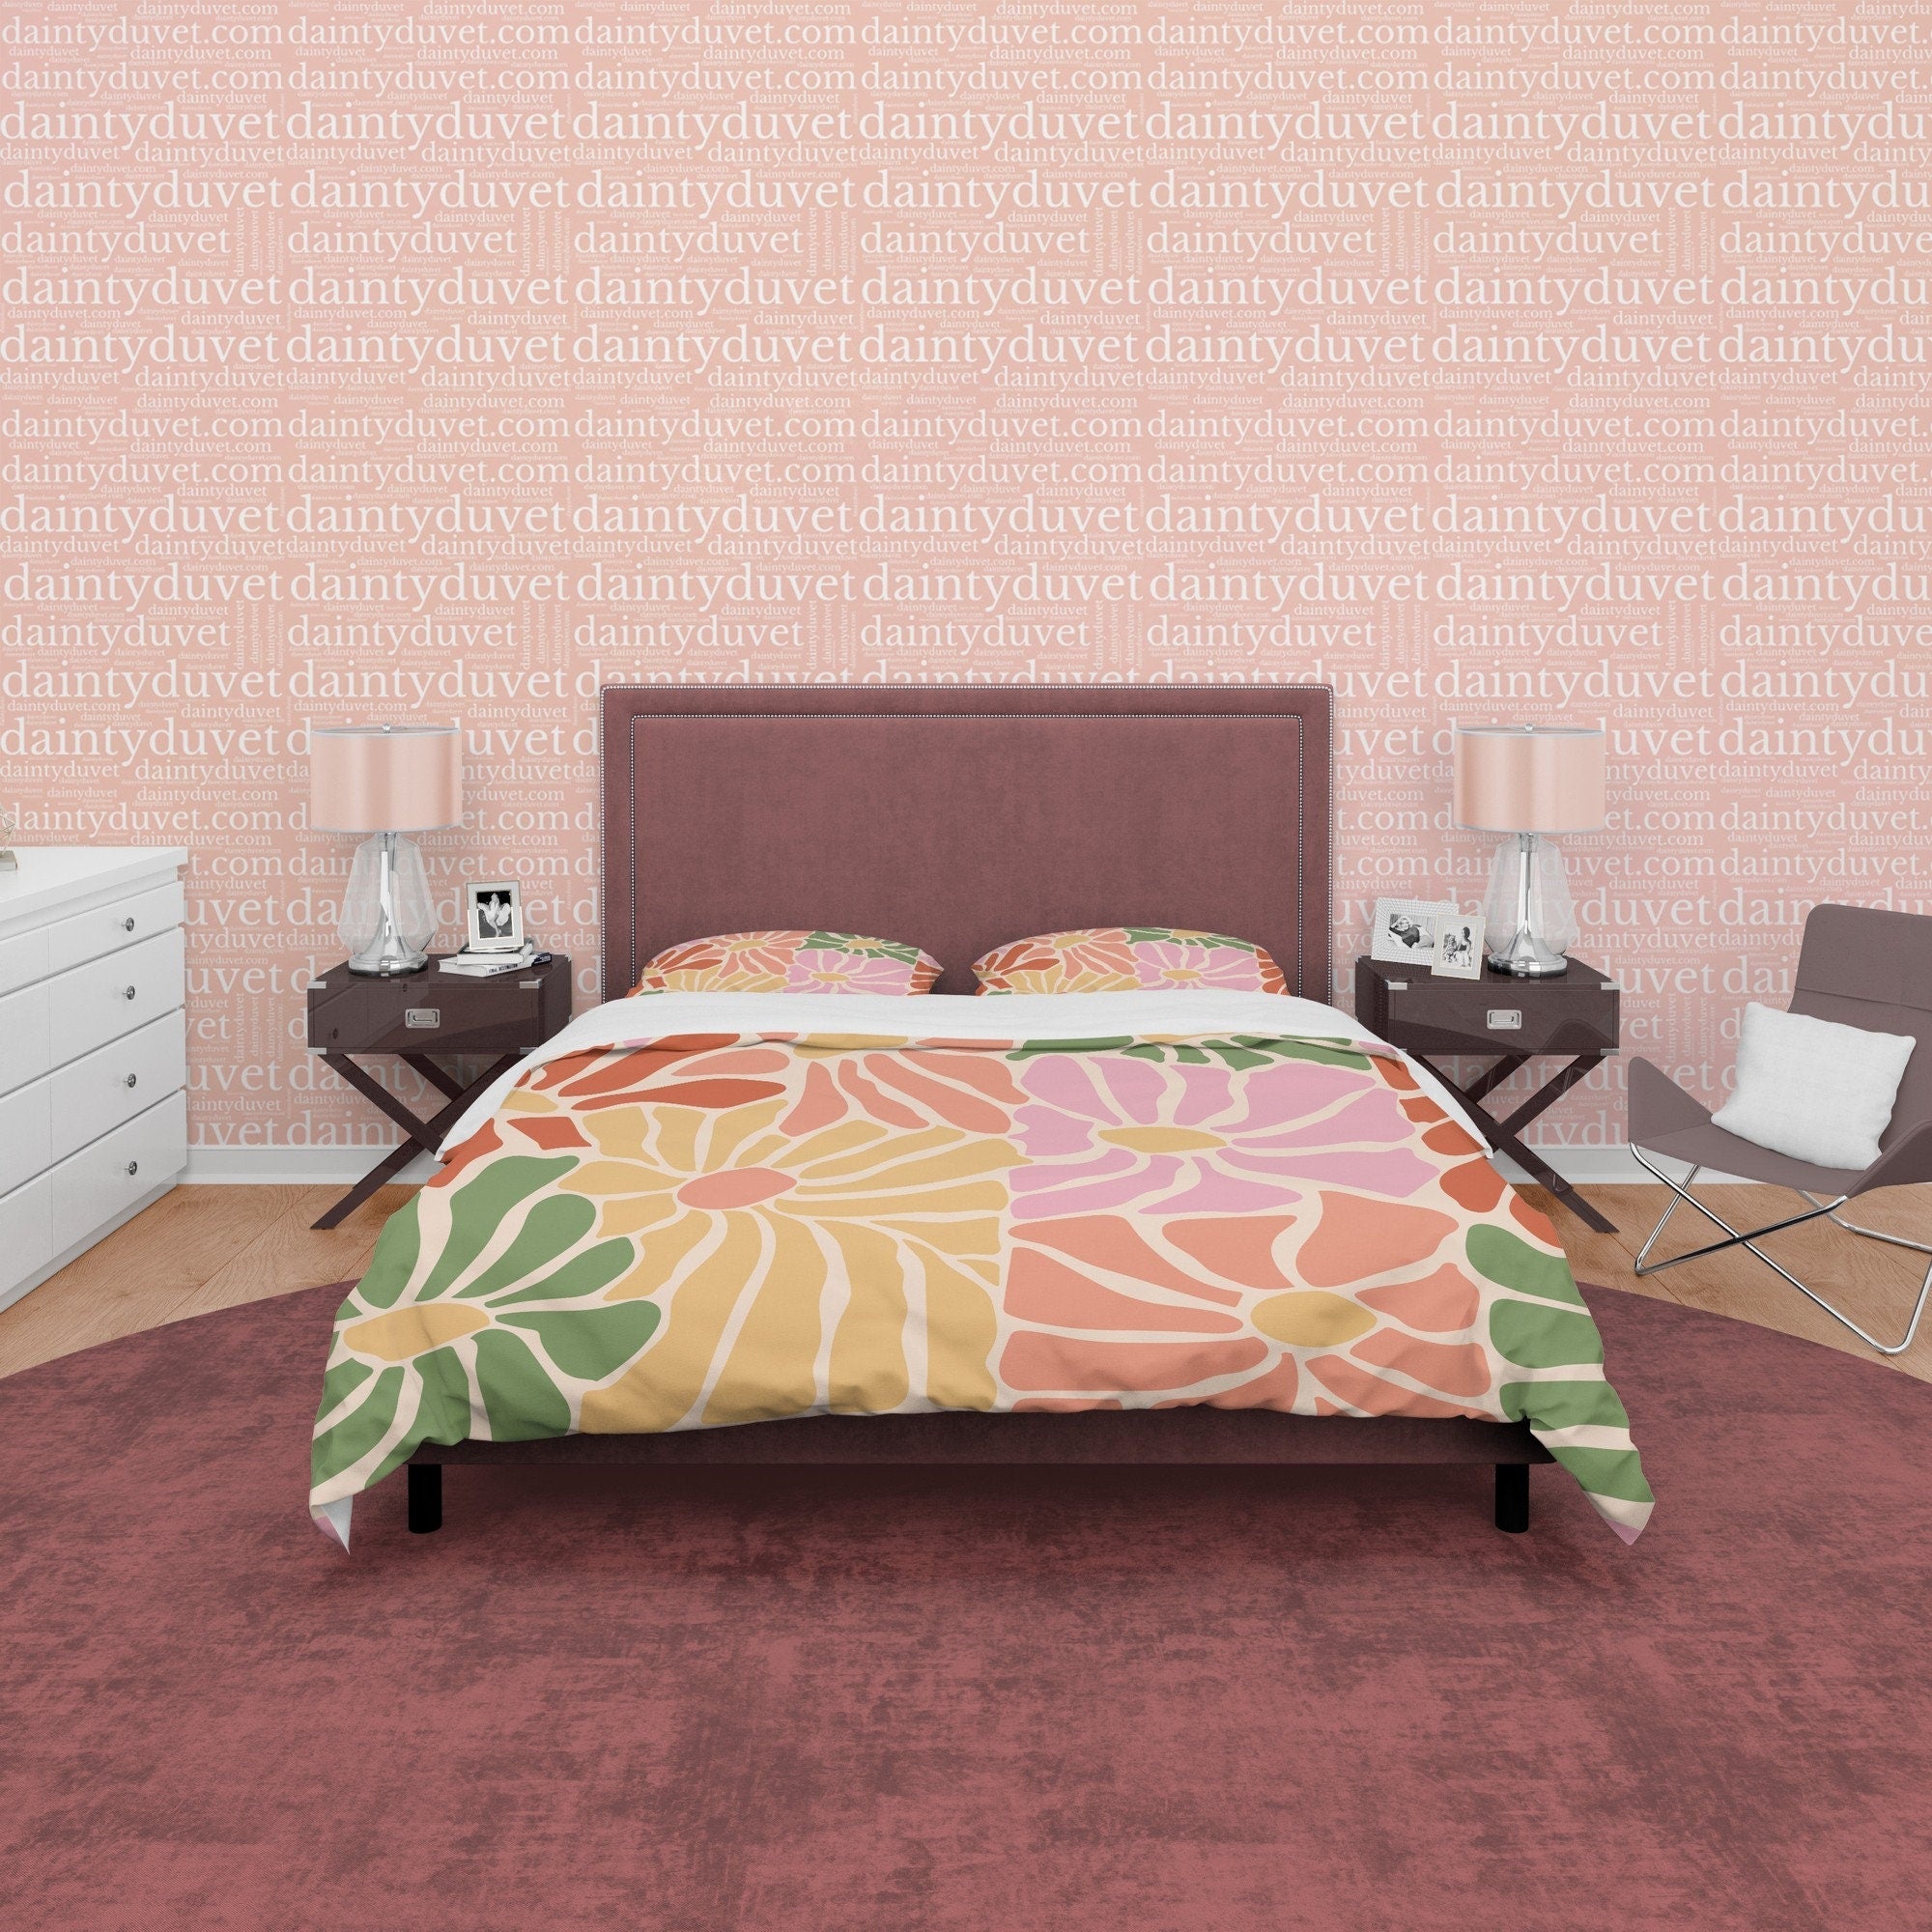 Colorful Flower Boho Bedding Beige Duvet Cover Bohemian Bedroom Set, Floral Quilt Cover, Aesthetic Bedspread, Bright Unique Blanket Cover